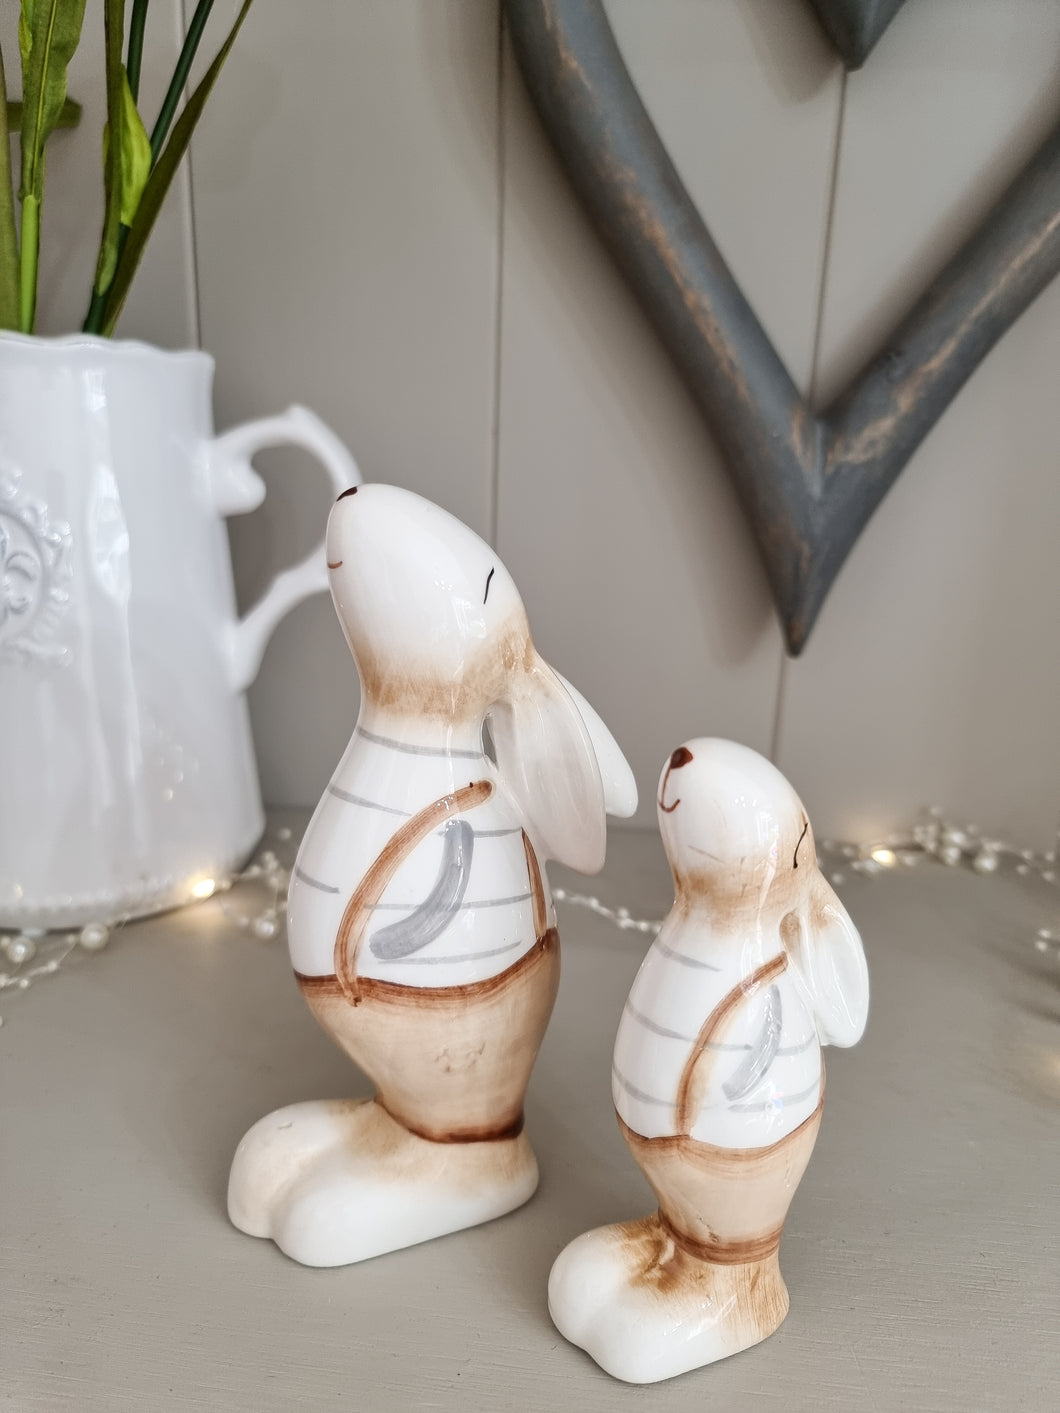 Bunny Boy Ceramic Figure In Dungarees